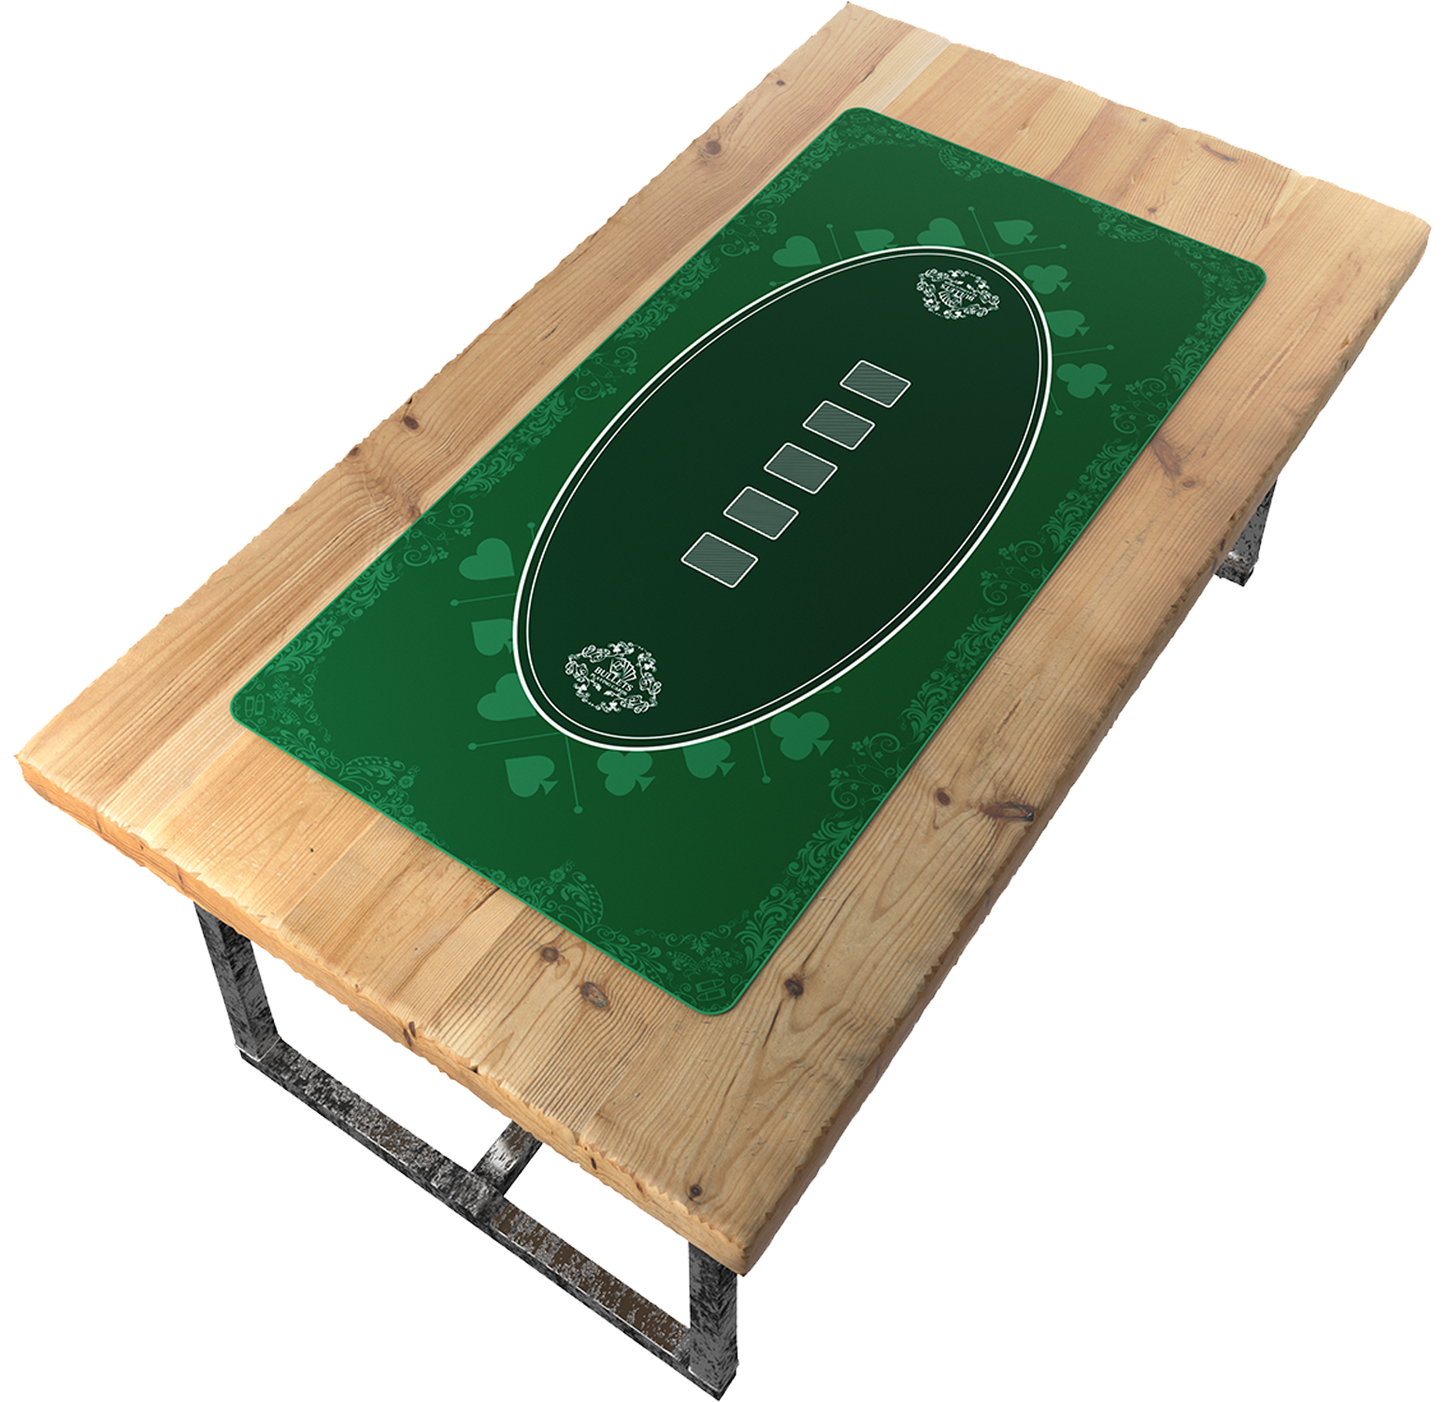 Poker mat 160 x 80 cm, square - casino design